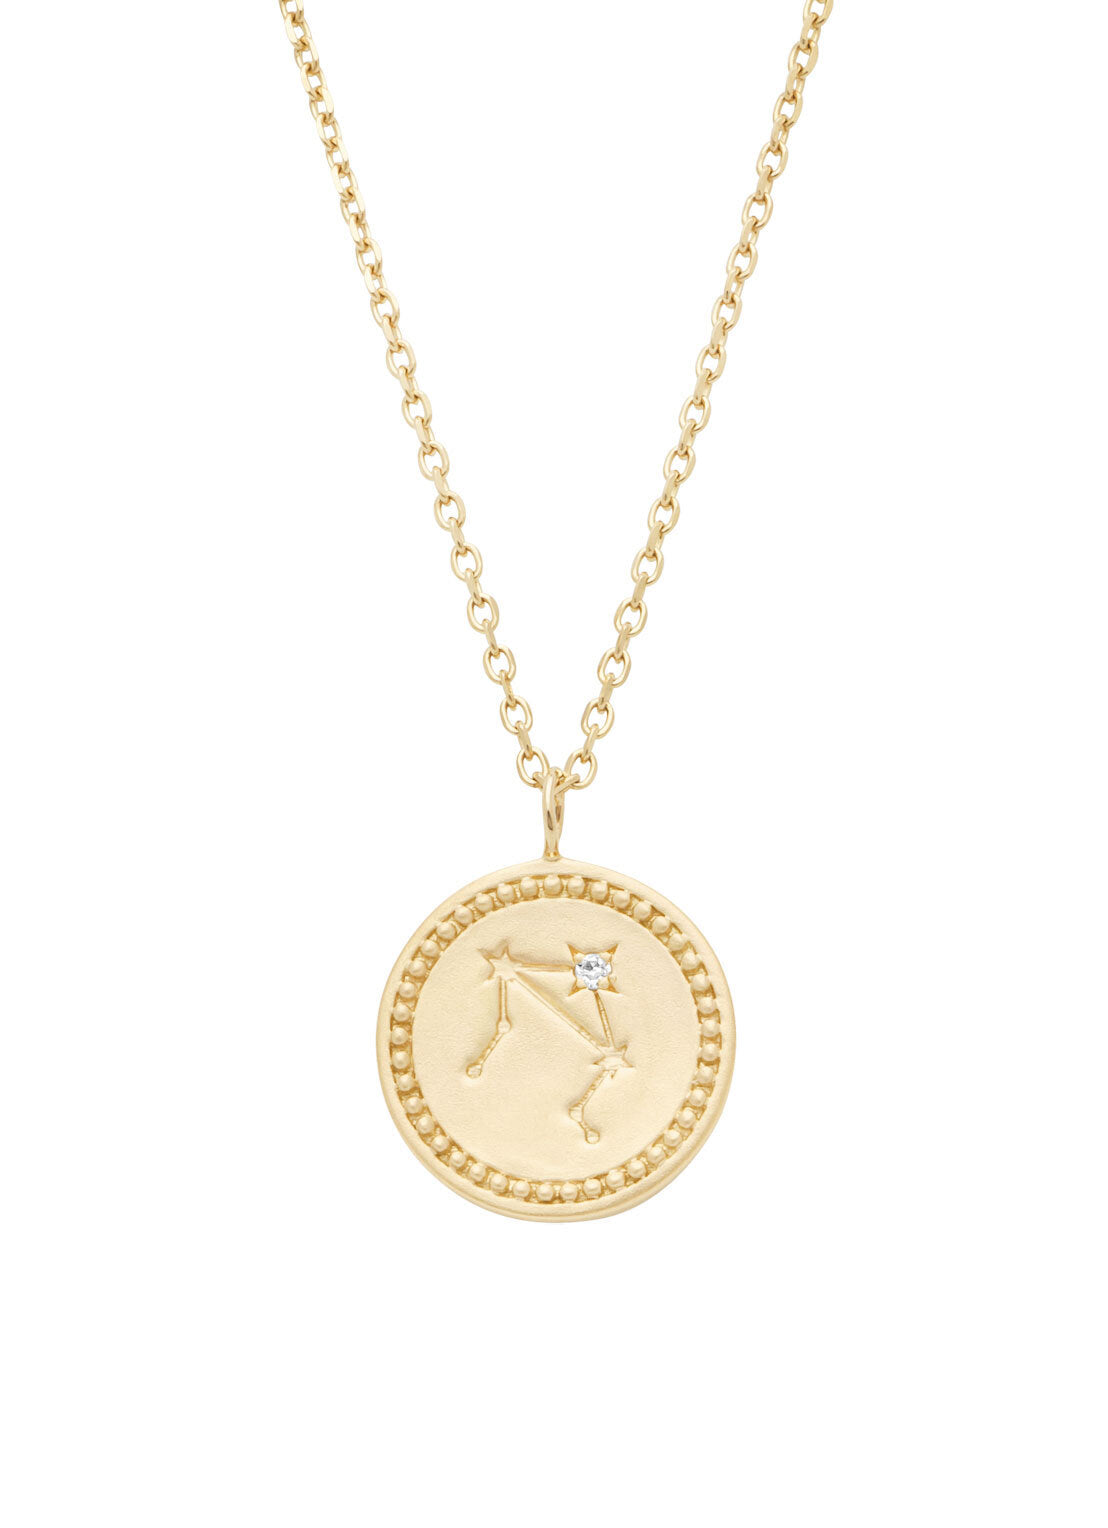 Yellow gold necklace, zodiac-libra (scales)